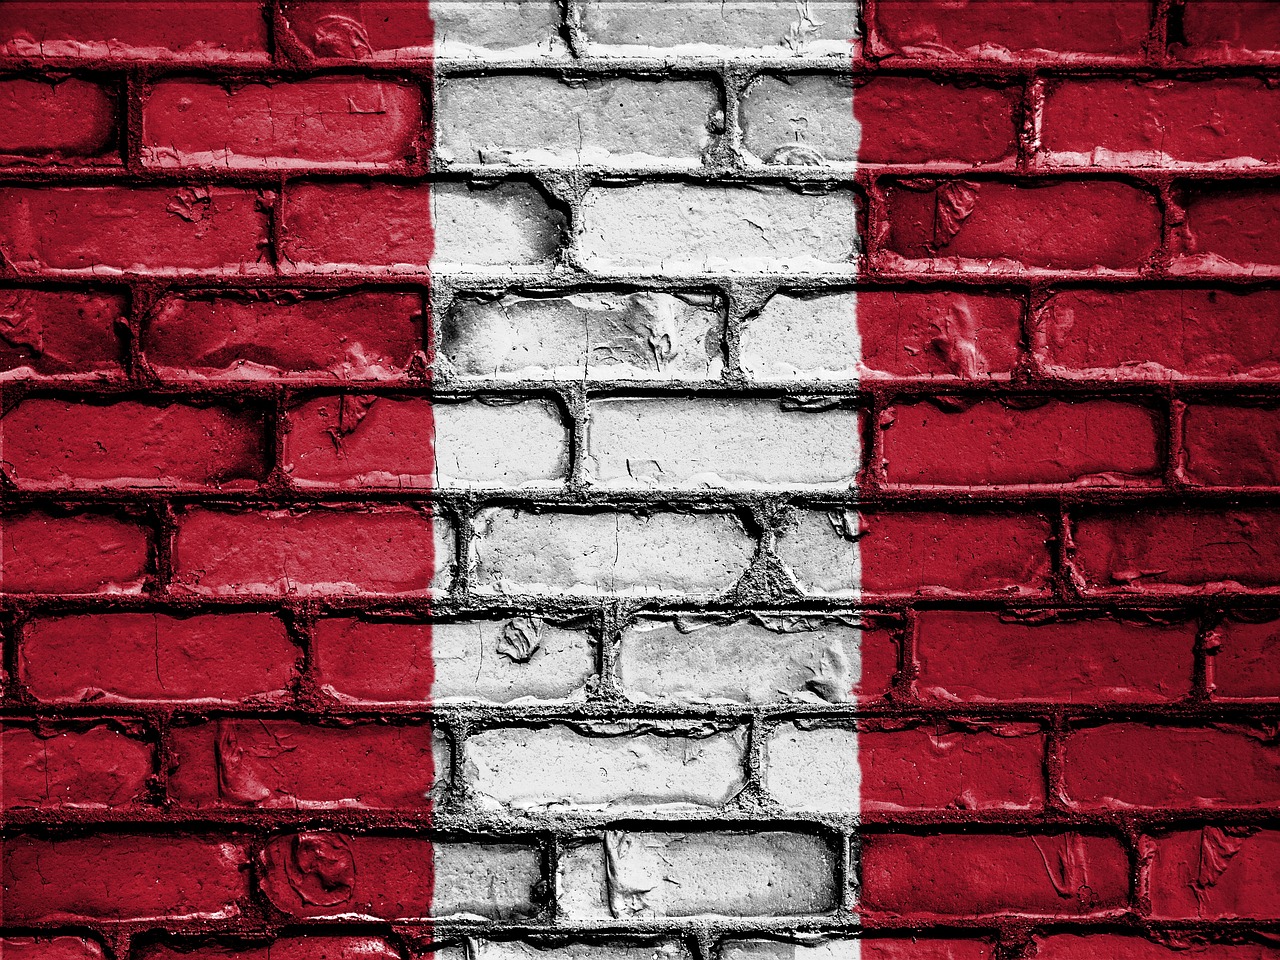 Peruvian Flag (photo credit: David_Peterson via pixabay)